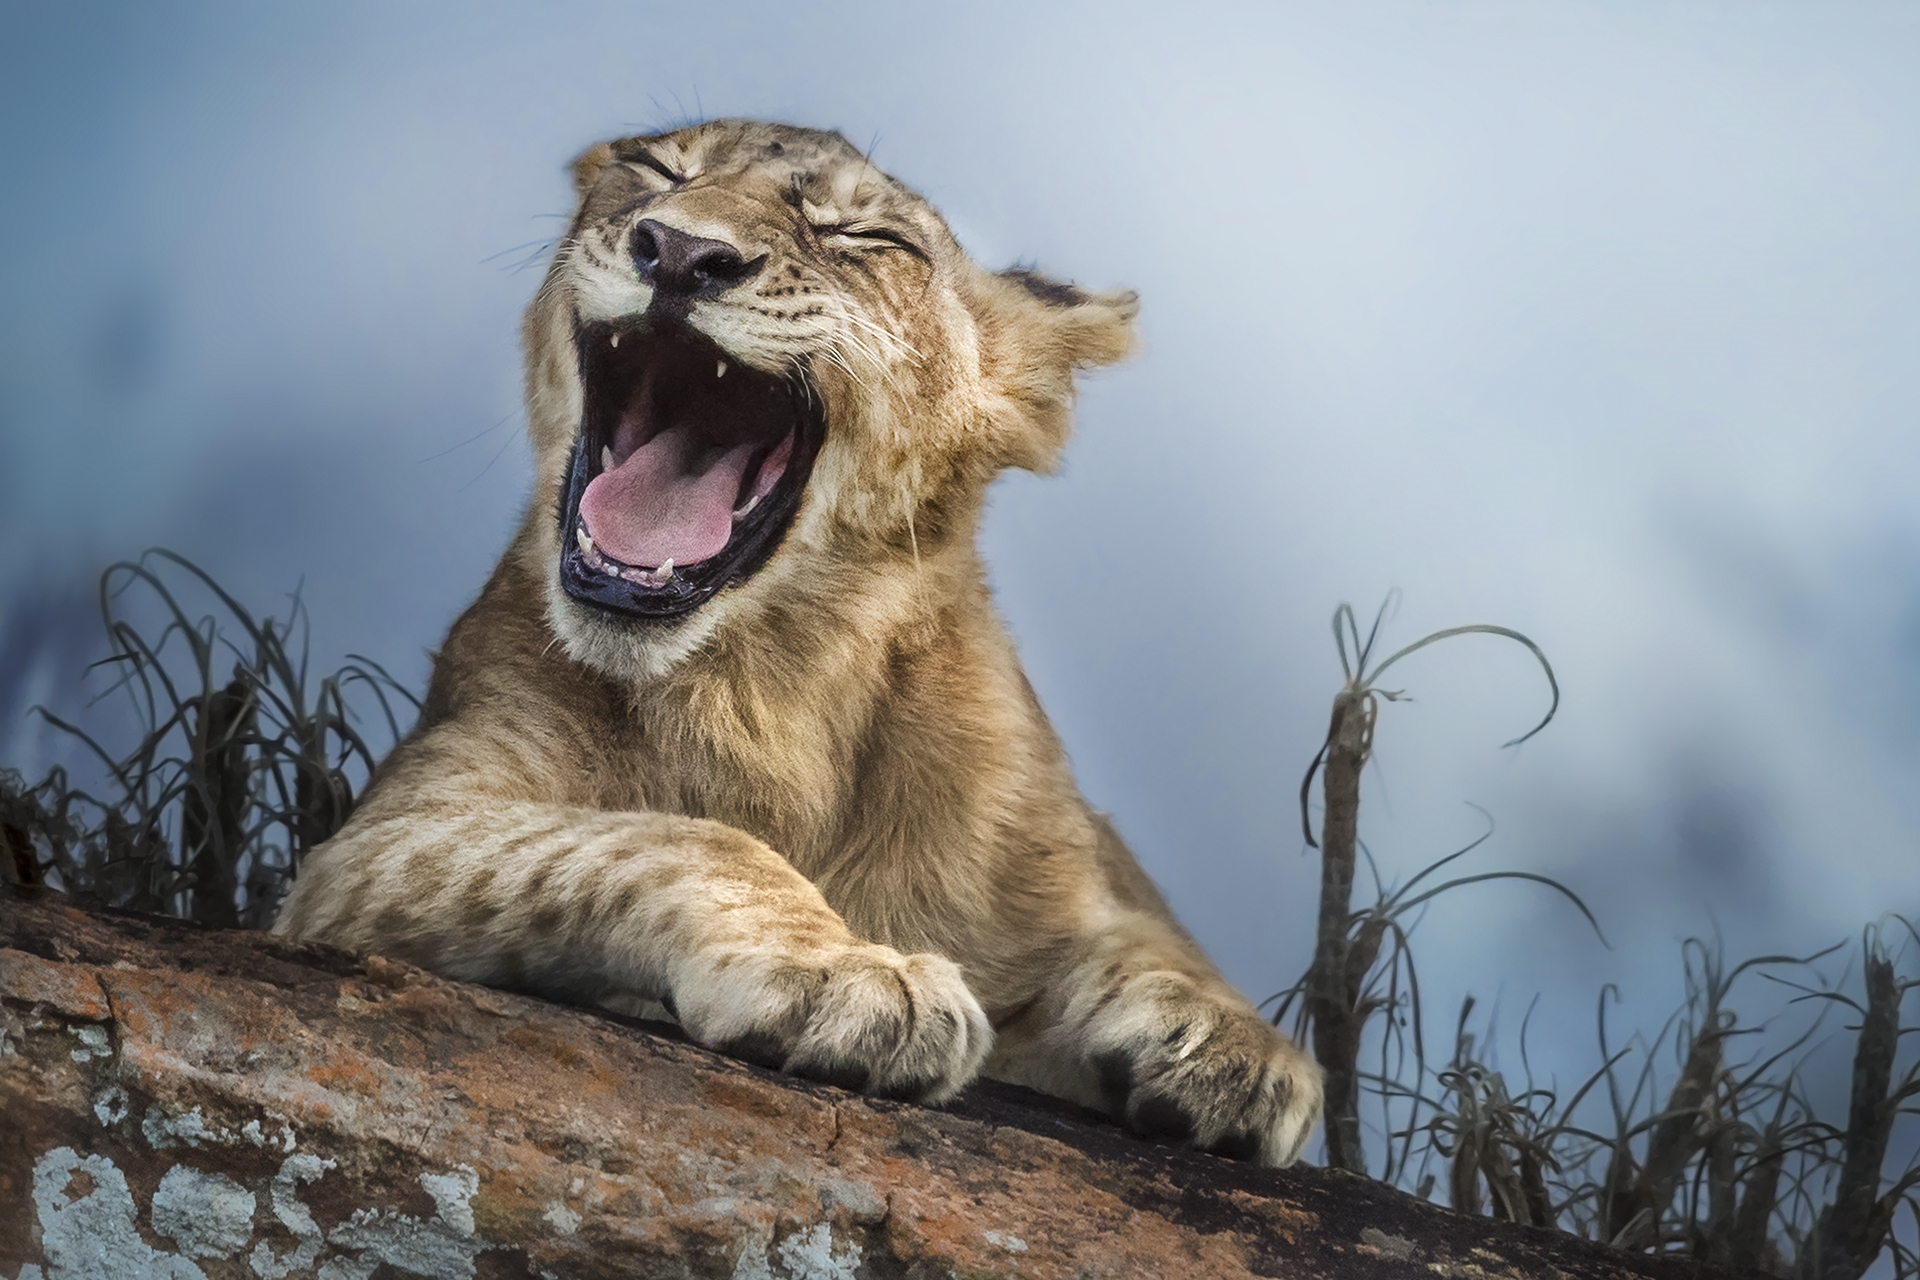 Wallpapers Lion s Sound lion animal on the desktop